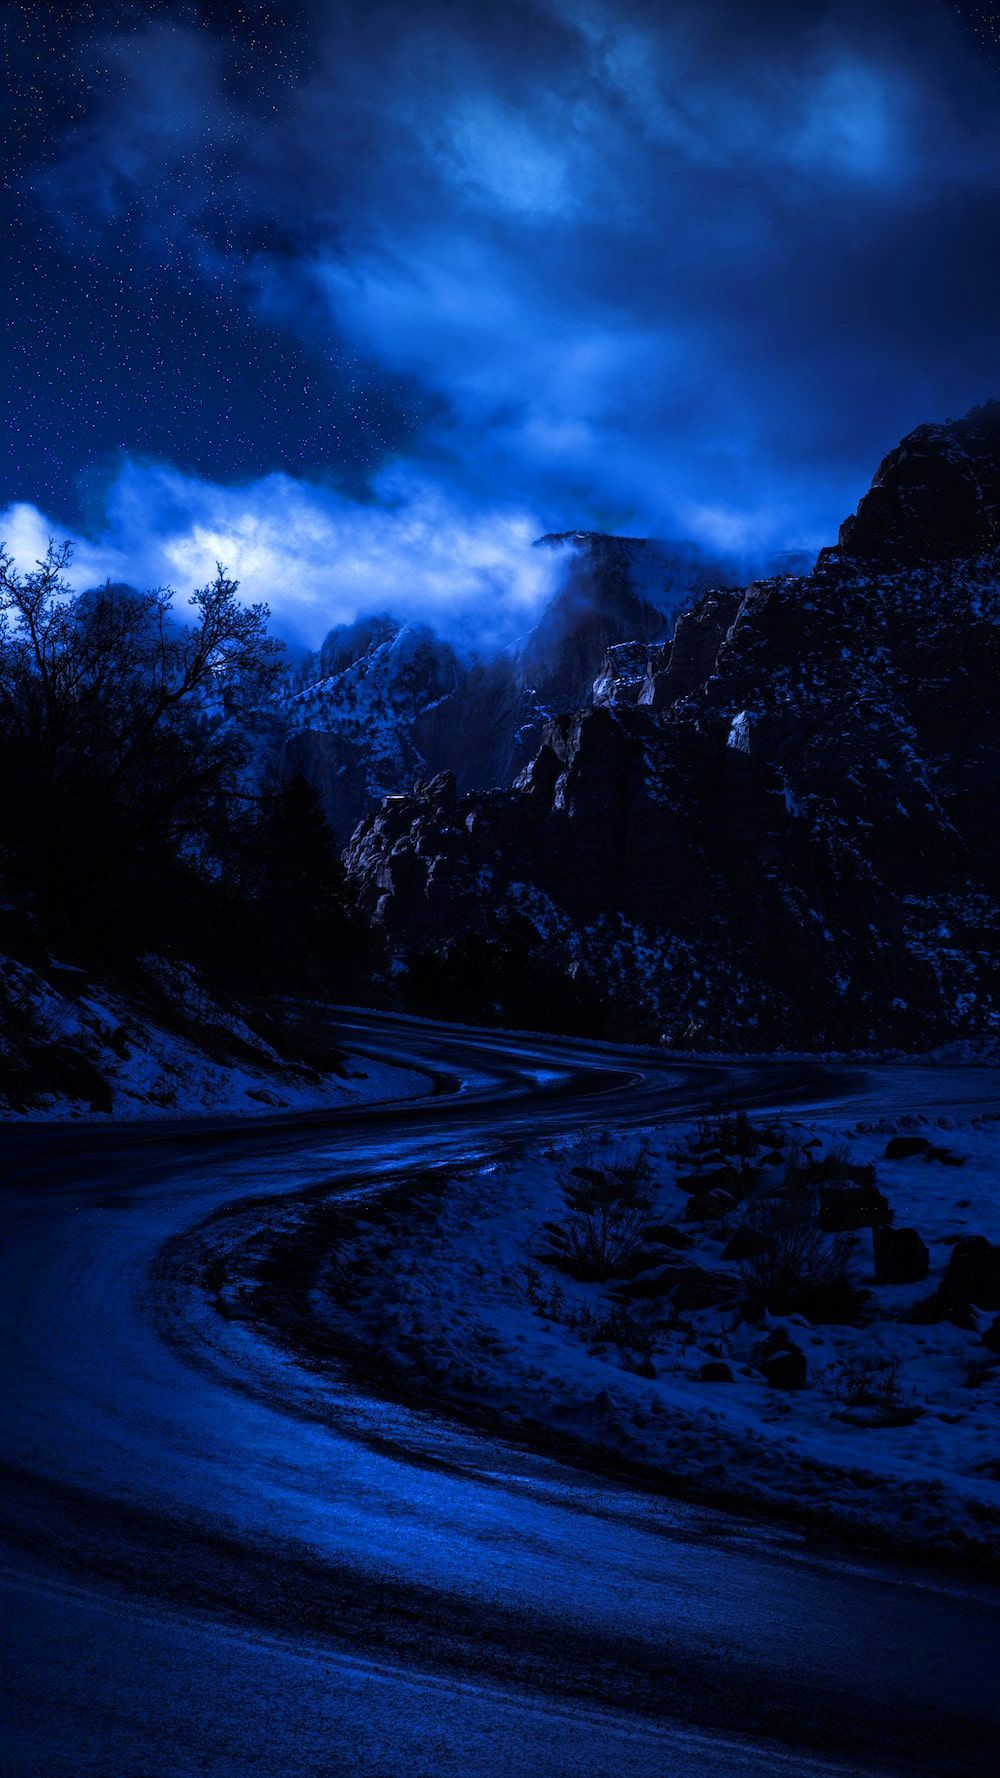 Nighttime shot of a mountain road - Dark blue, navy blue